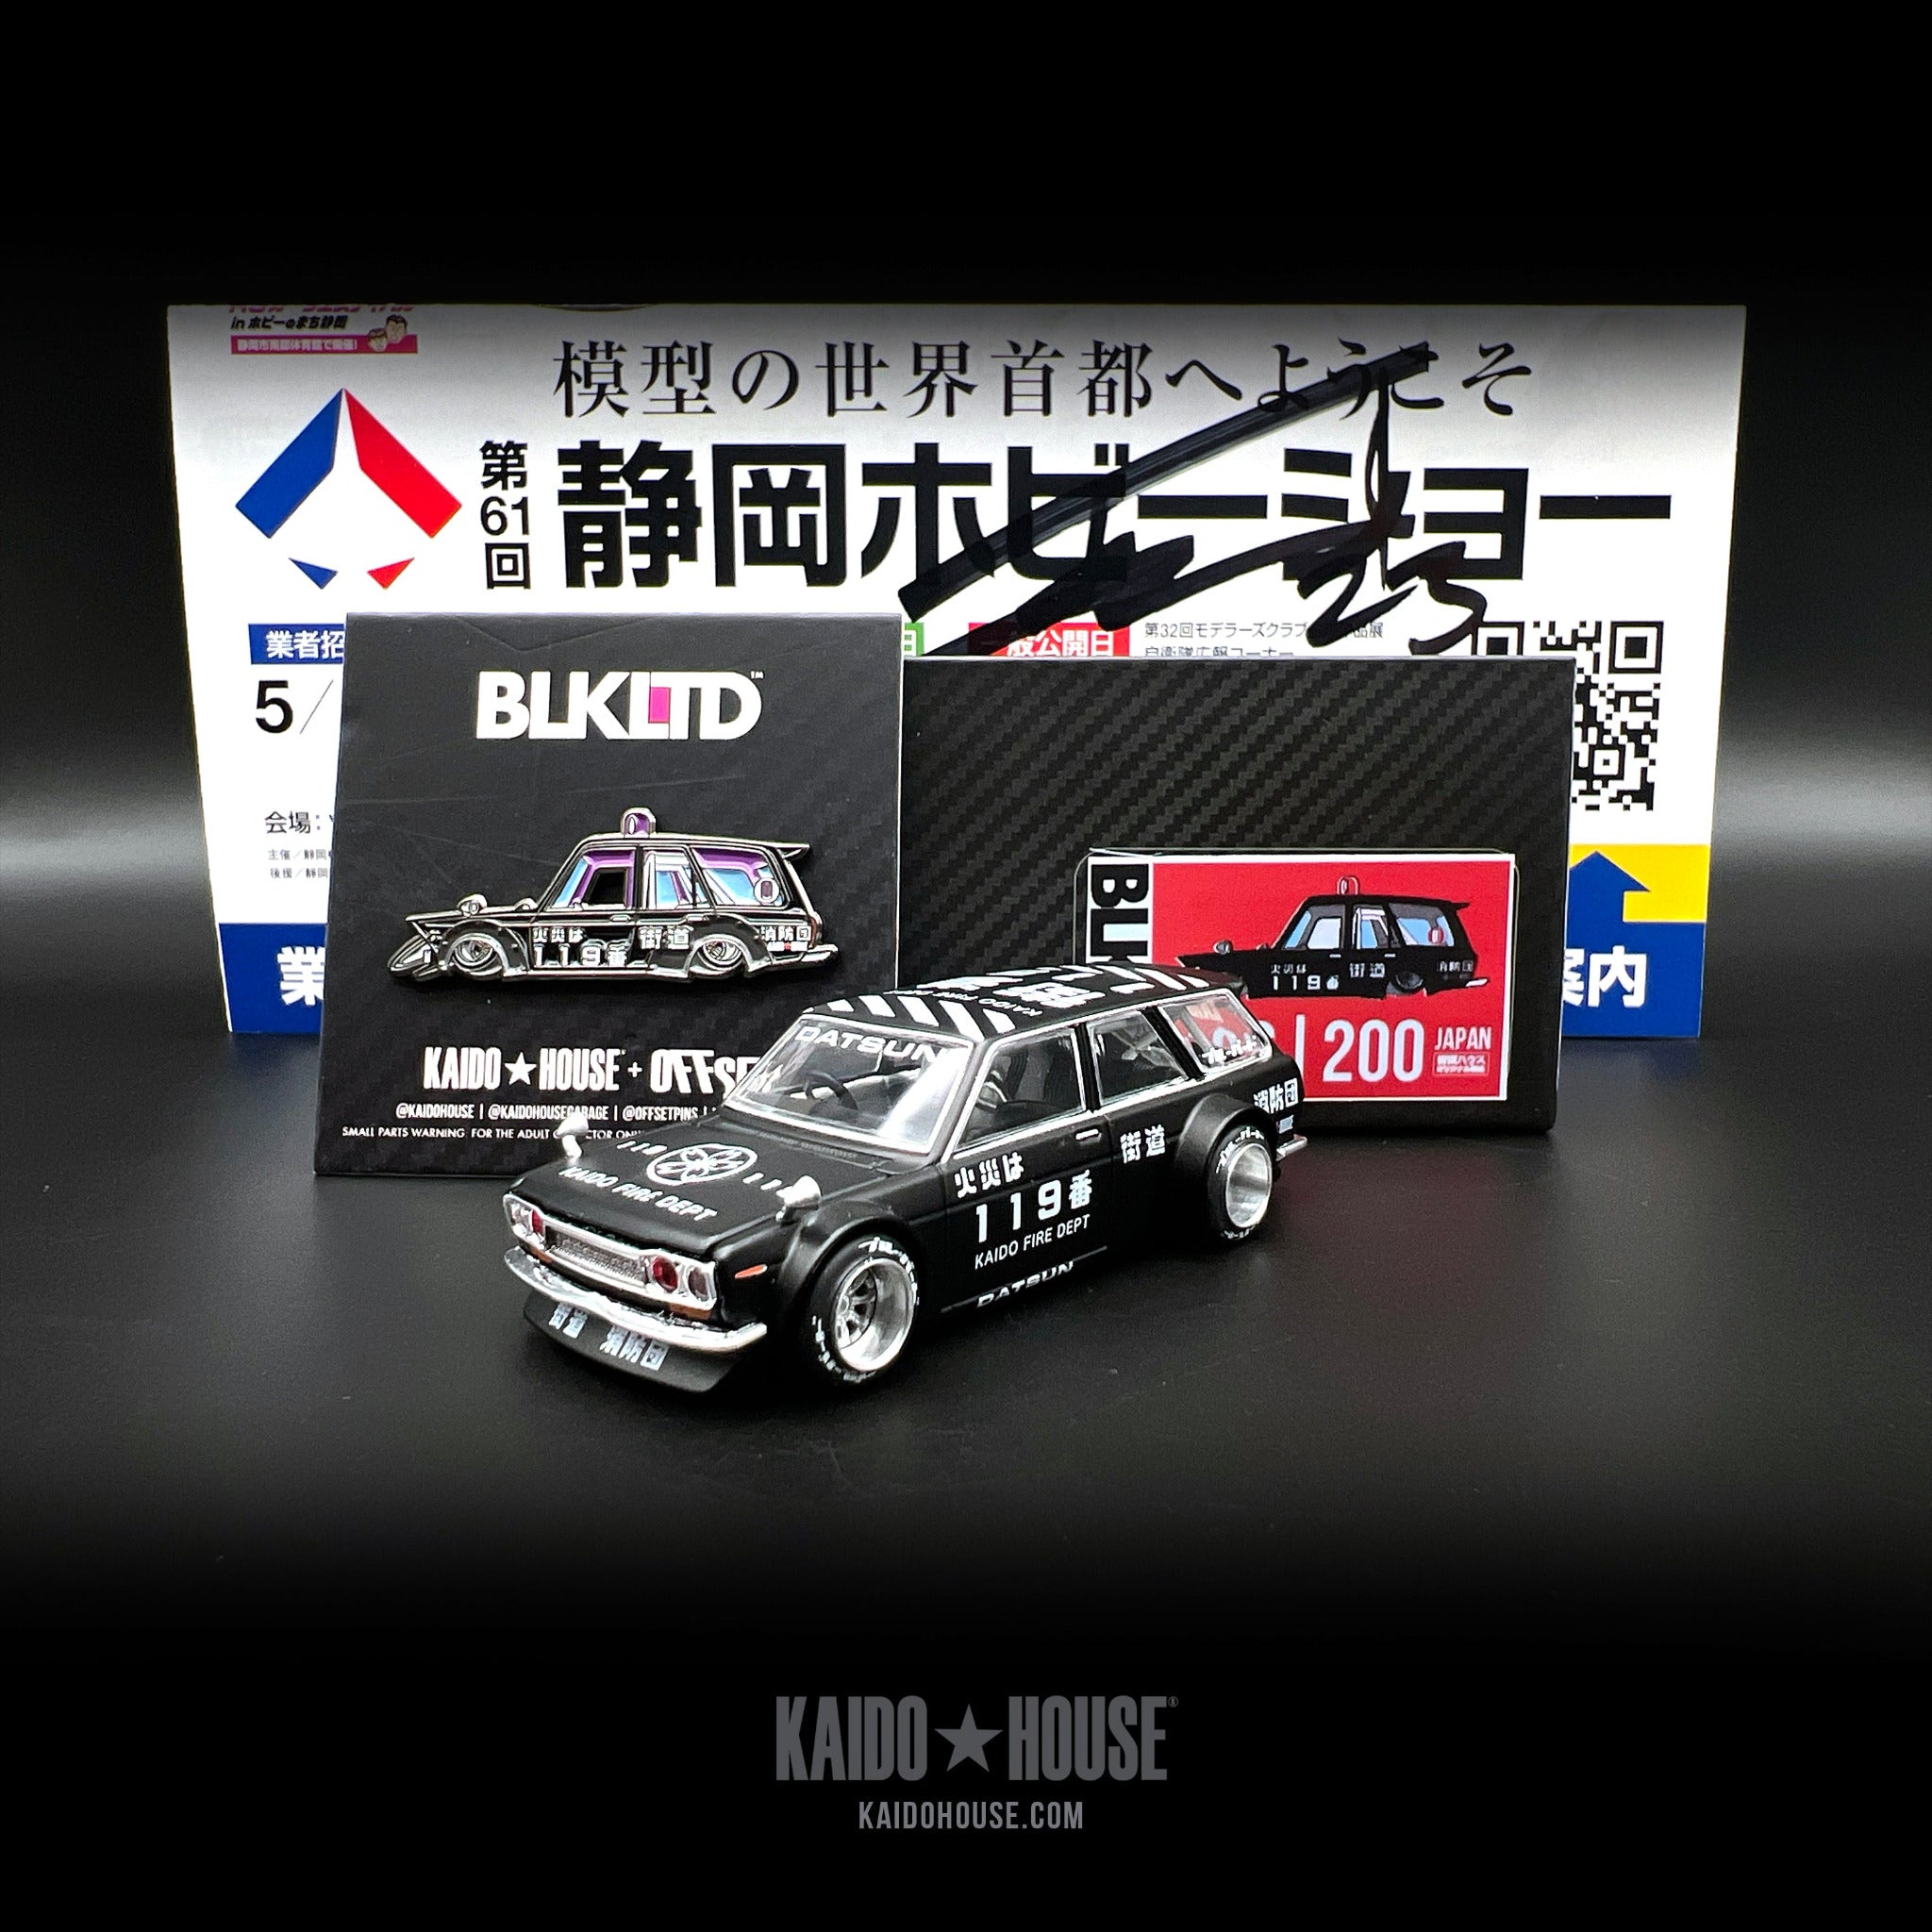 BLKLTD™ – KAIDO HOUSE LLC